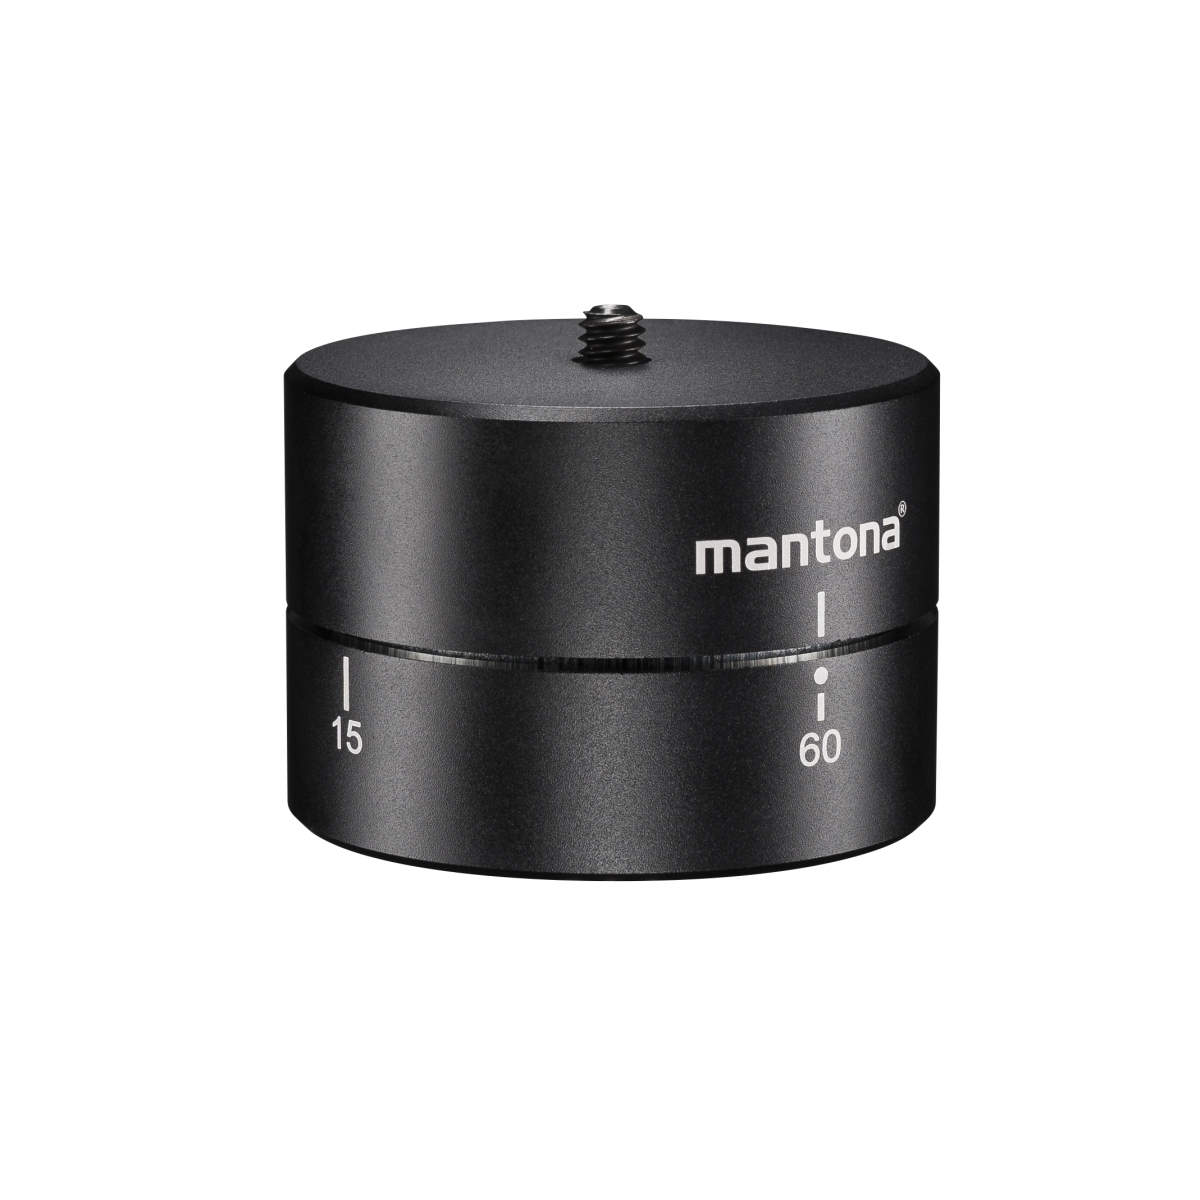 Mantona Turnaround 360 tripod head for GoPro